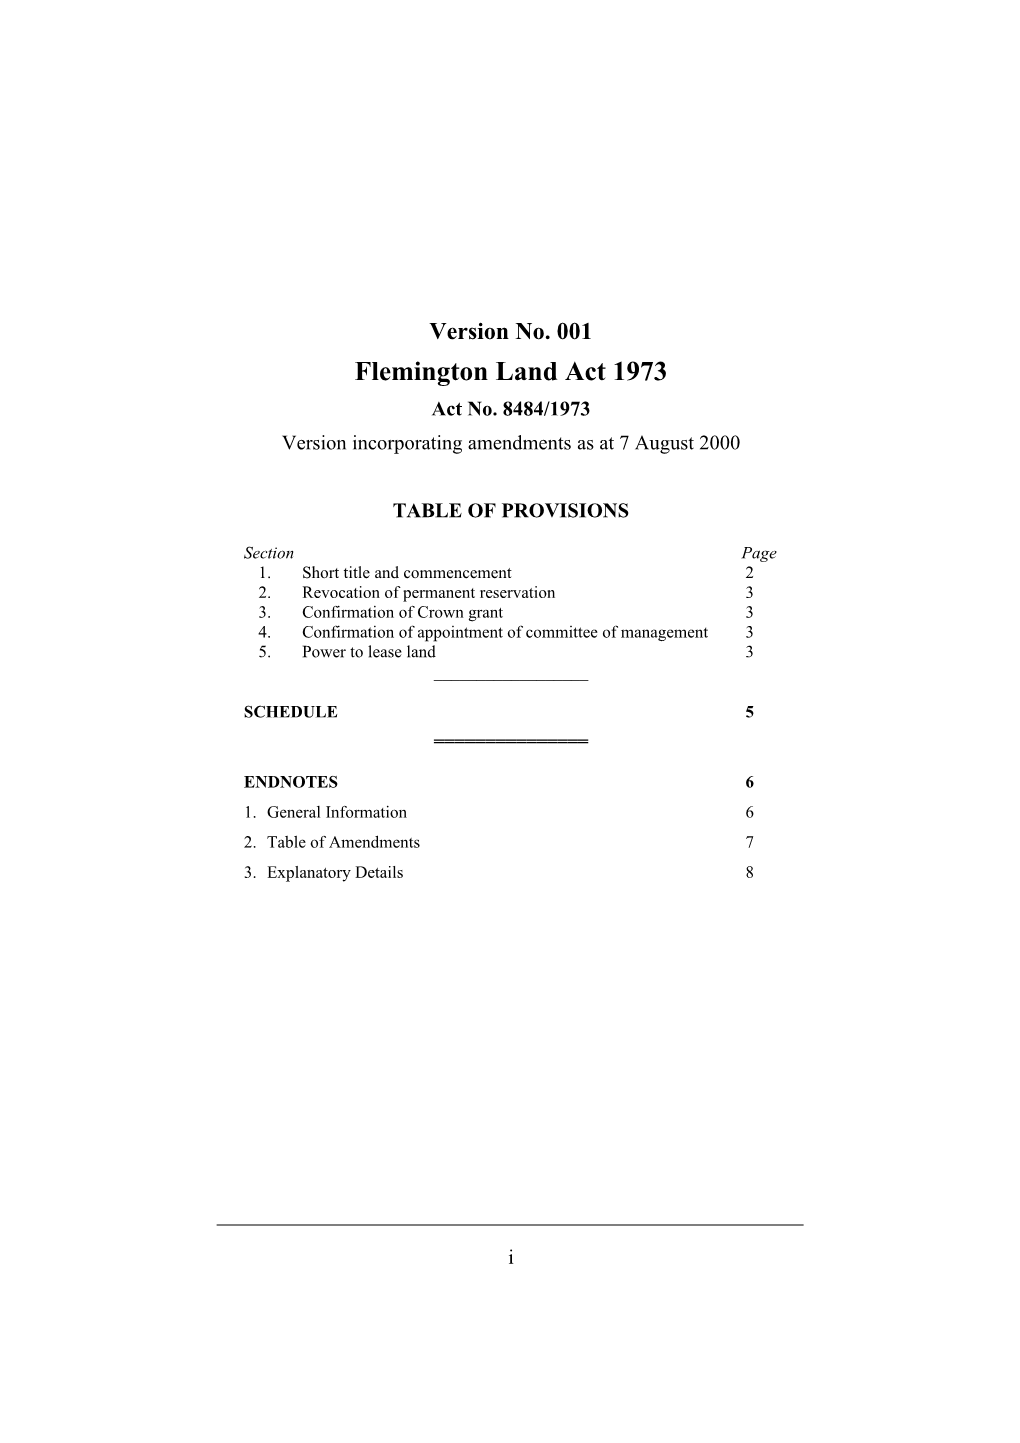 Flemington Land Act 1973